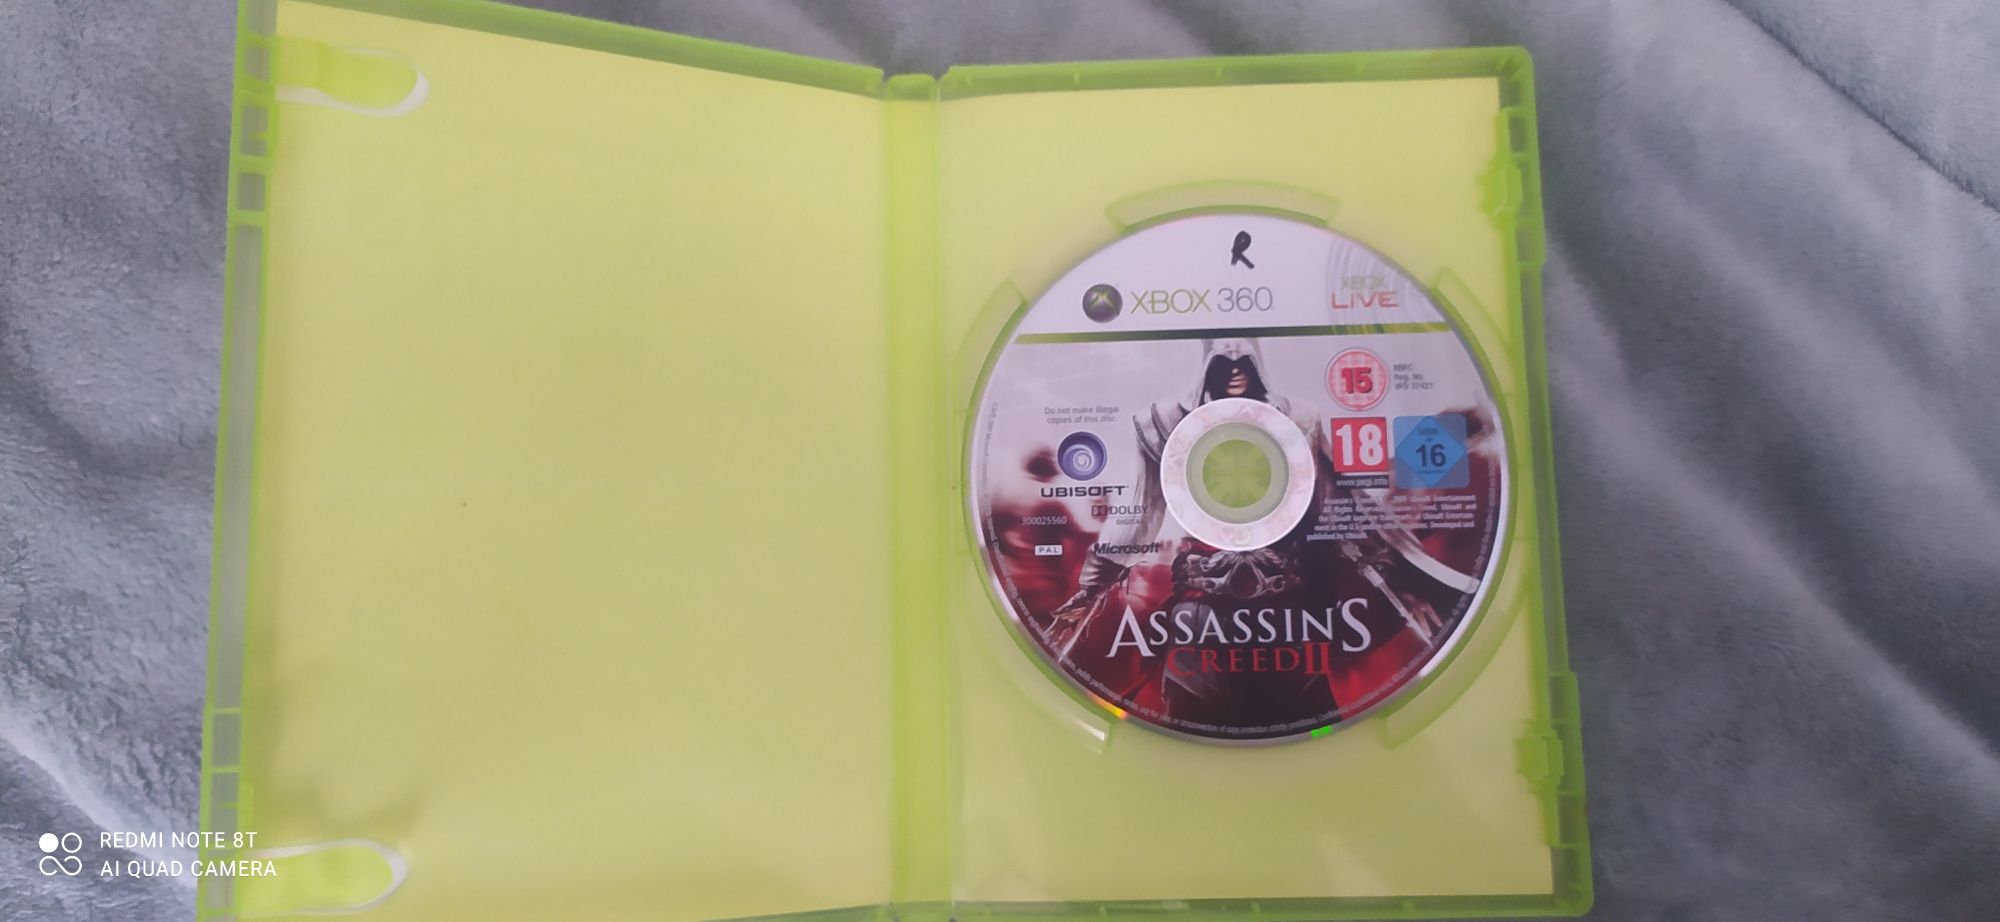 Assasins Creed 2 Xbox 360